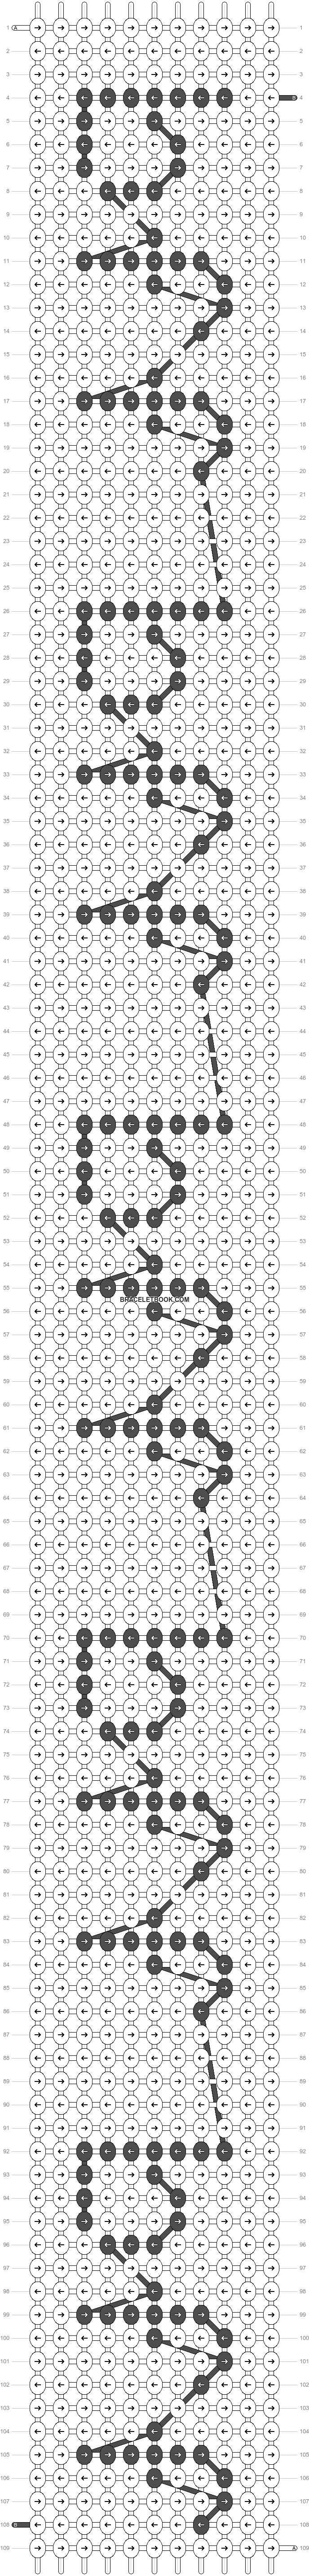 Alpha pattern #6660 variation #92539 pattern